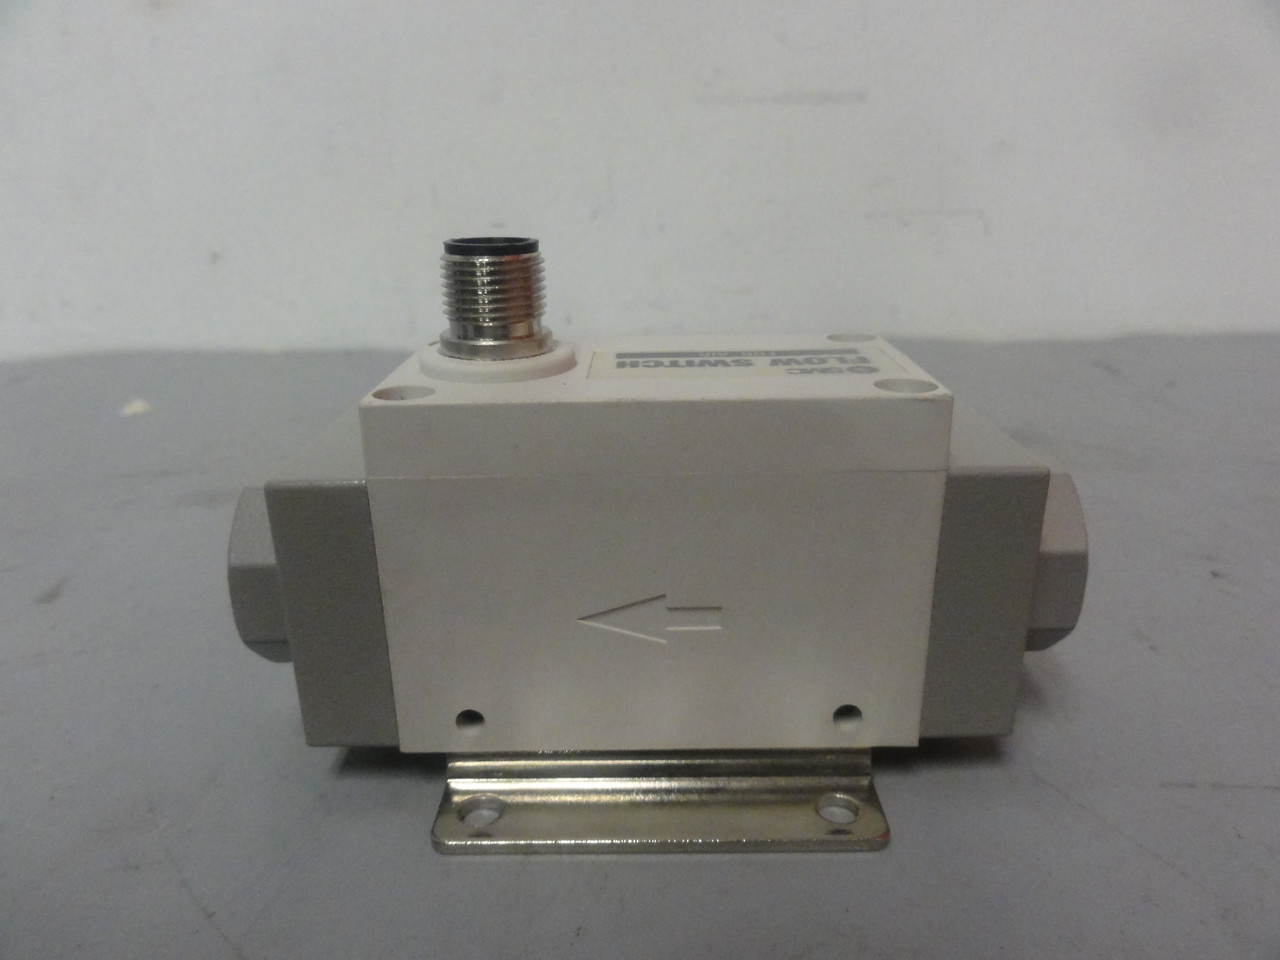 SMC PFA510-N02 Flow Sensor